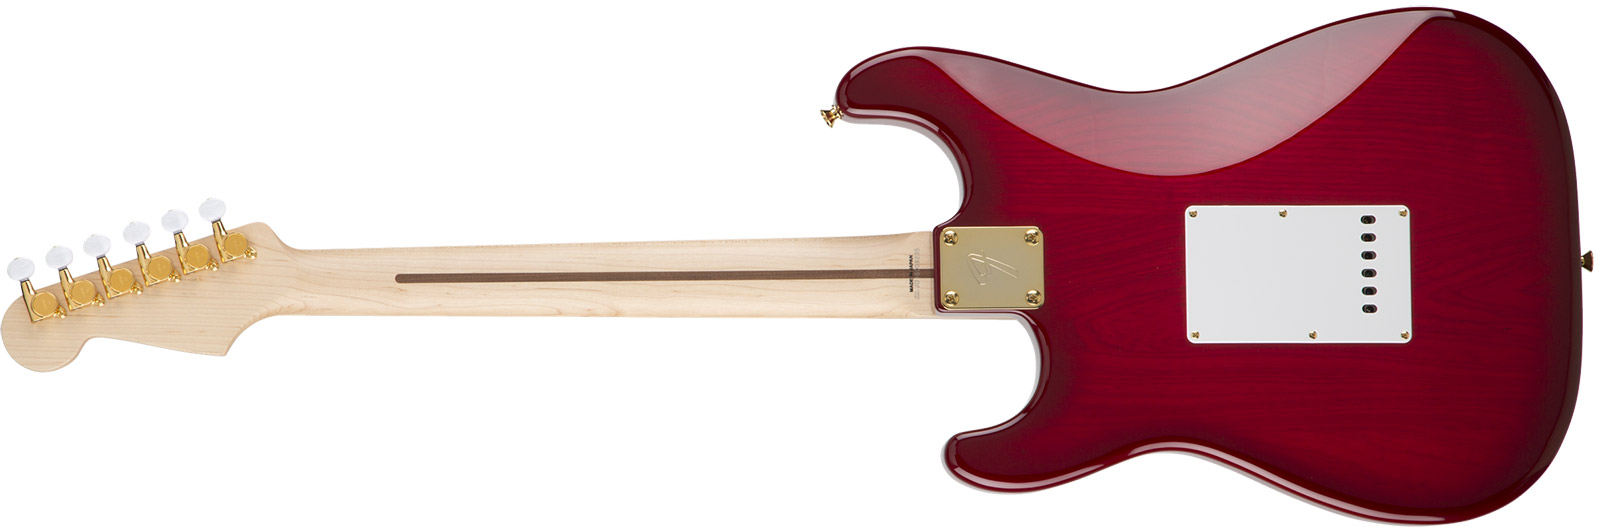 Fender Richie Kotzen Strat Japan Ltd 3s Mn - Transparent Red Burst - Guitarra eléctrica con forma de str. - Variation 4